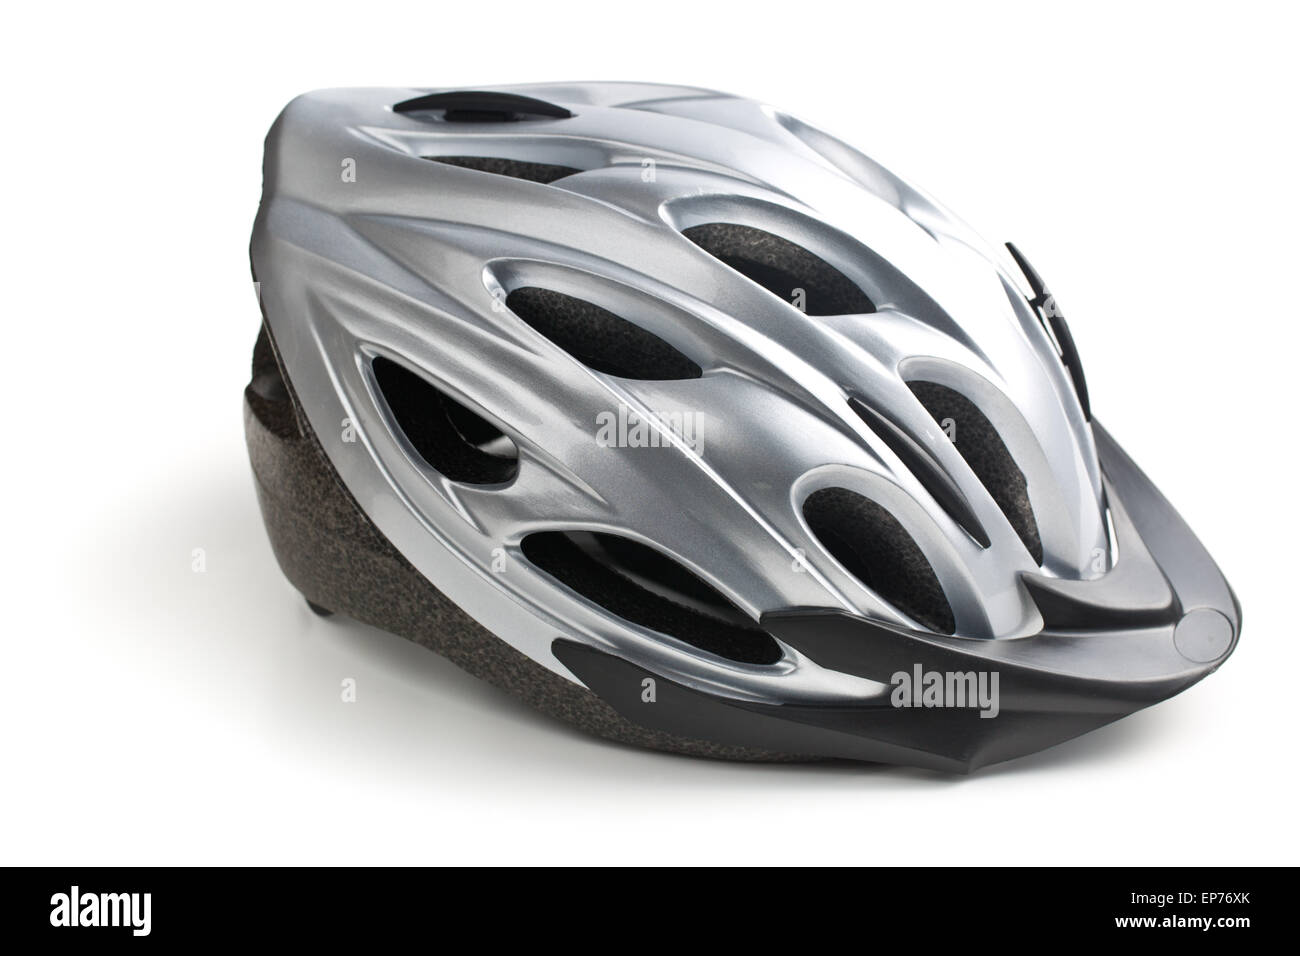 bicycle helmet on white background Stock Photo